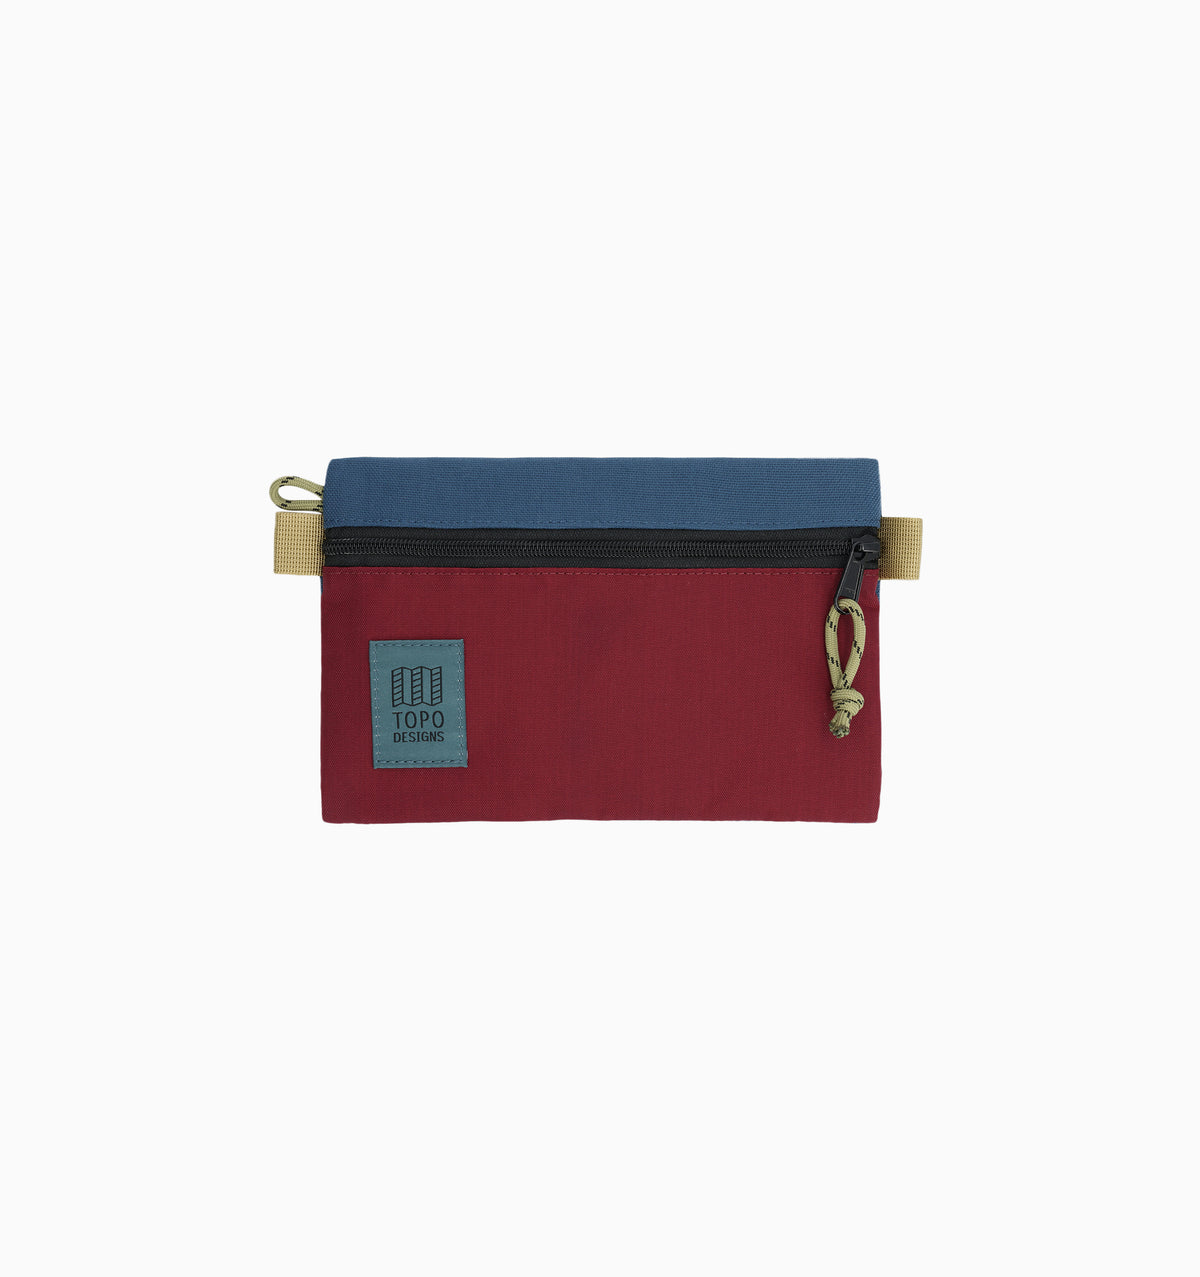 Topo Designs Small Accessory Bag - Dark Denim/Burgundy